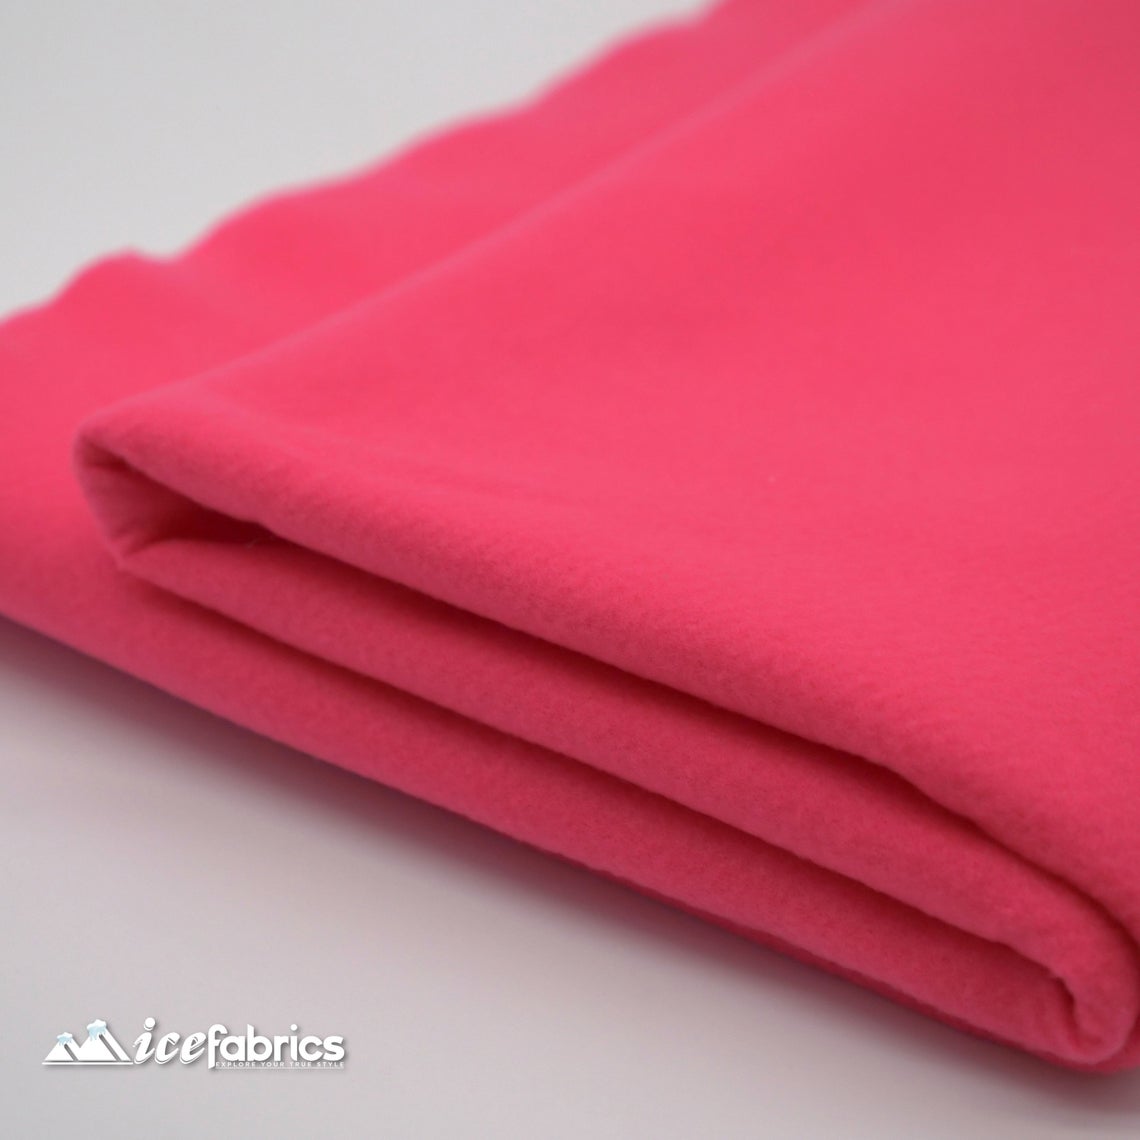 72" Wide 1.6 mm Thick Acrylic Hot Pink Felt Fabric By The YardICE FABRICSICE FABRICSPer Yard1.6mm Thick72" Wide 1.6 mm Thick Acrylic Hot Pink Felt Fabric By The Yard ICE FABRICS